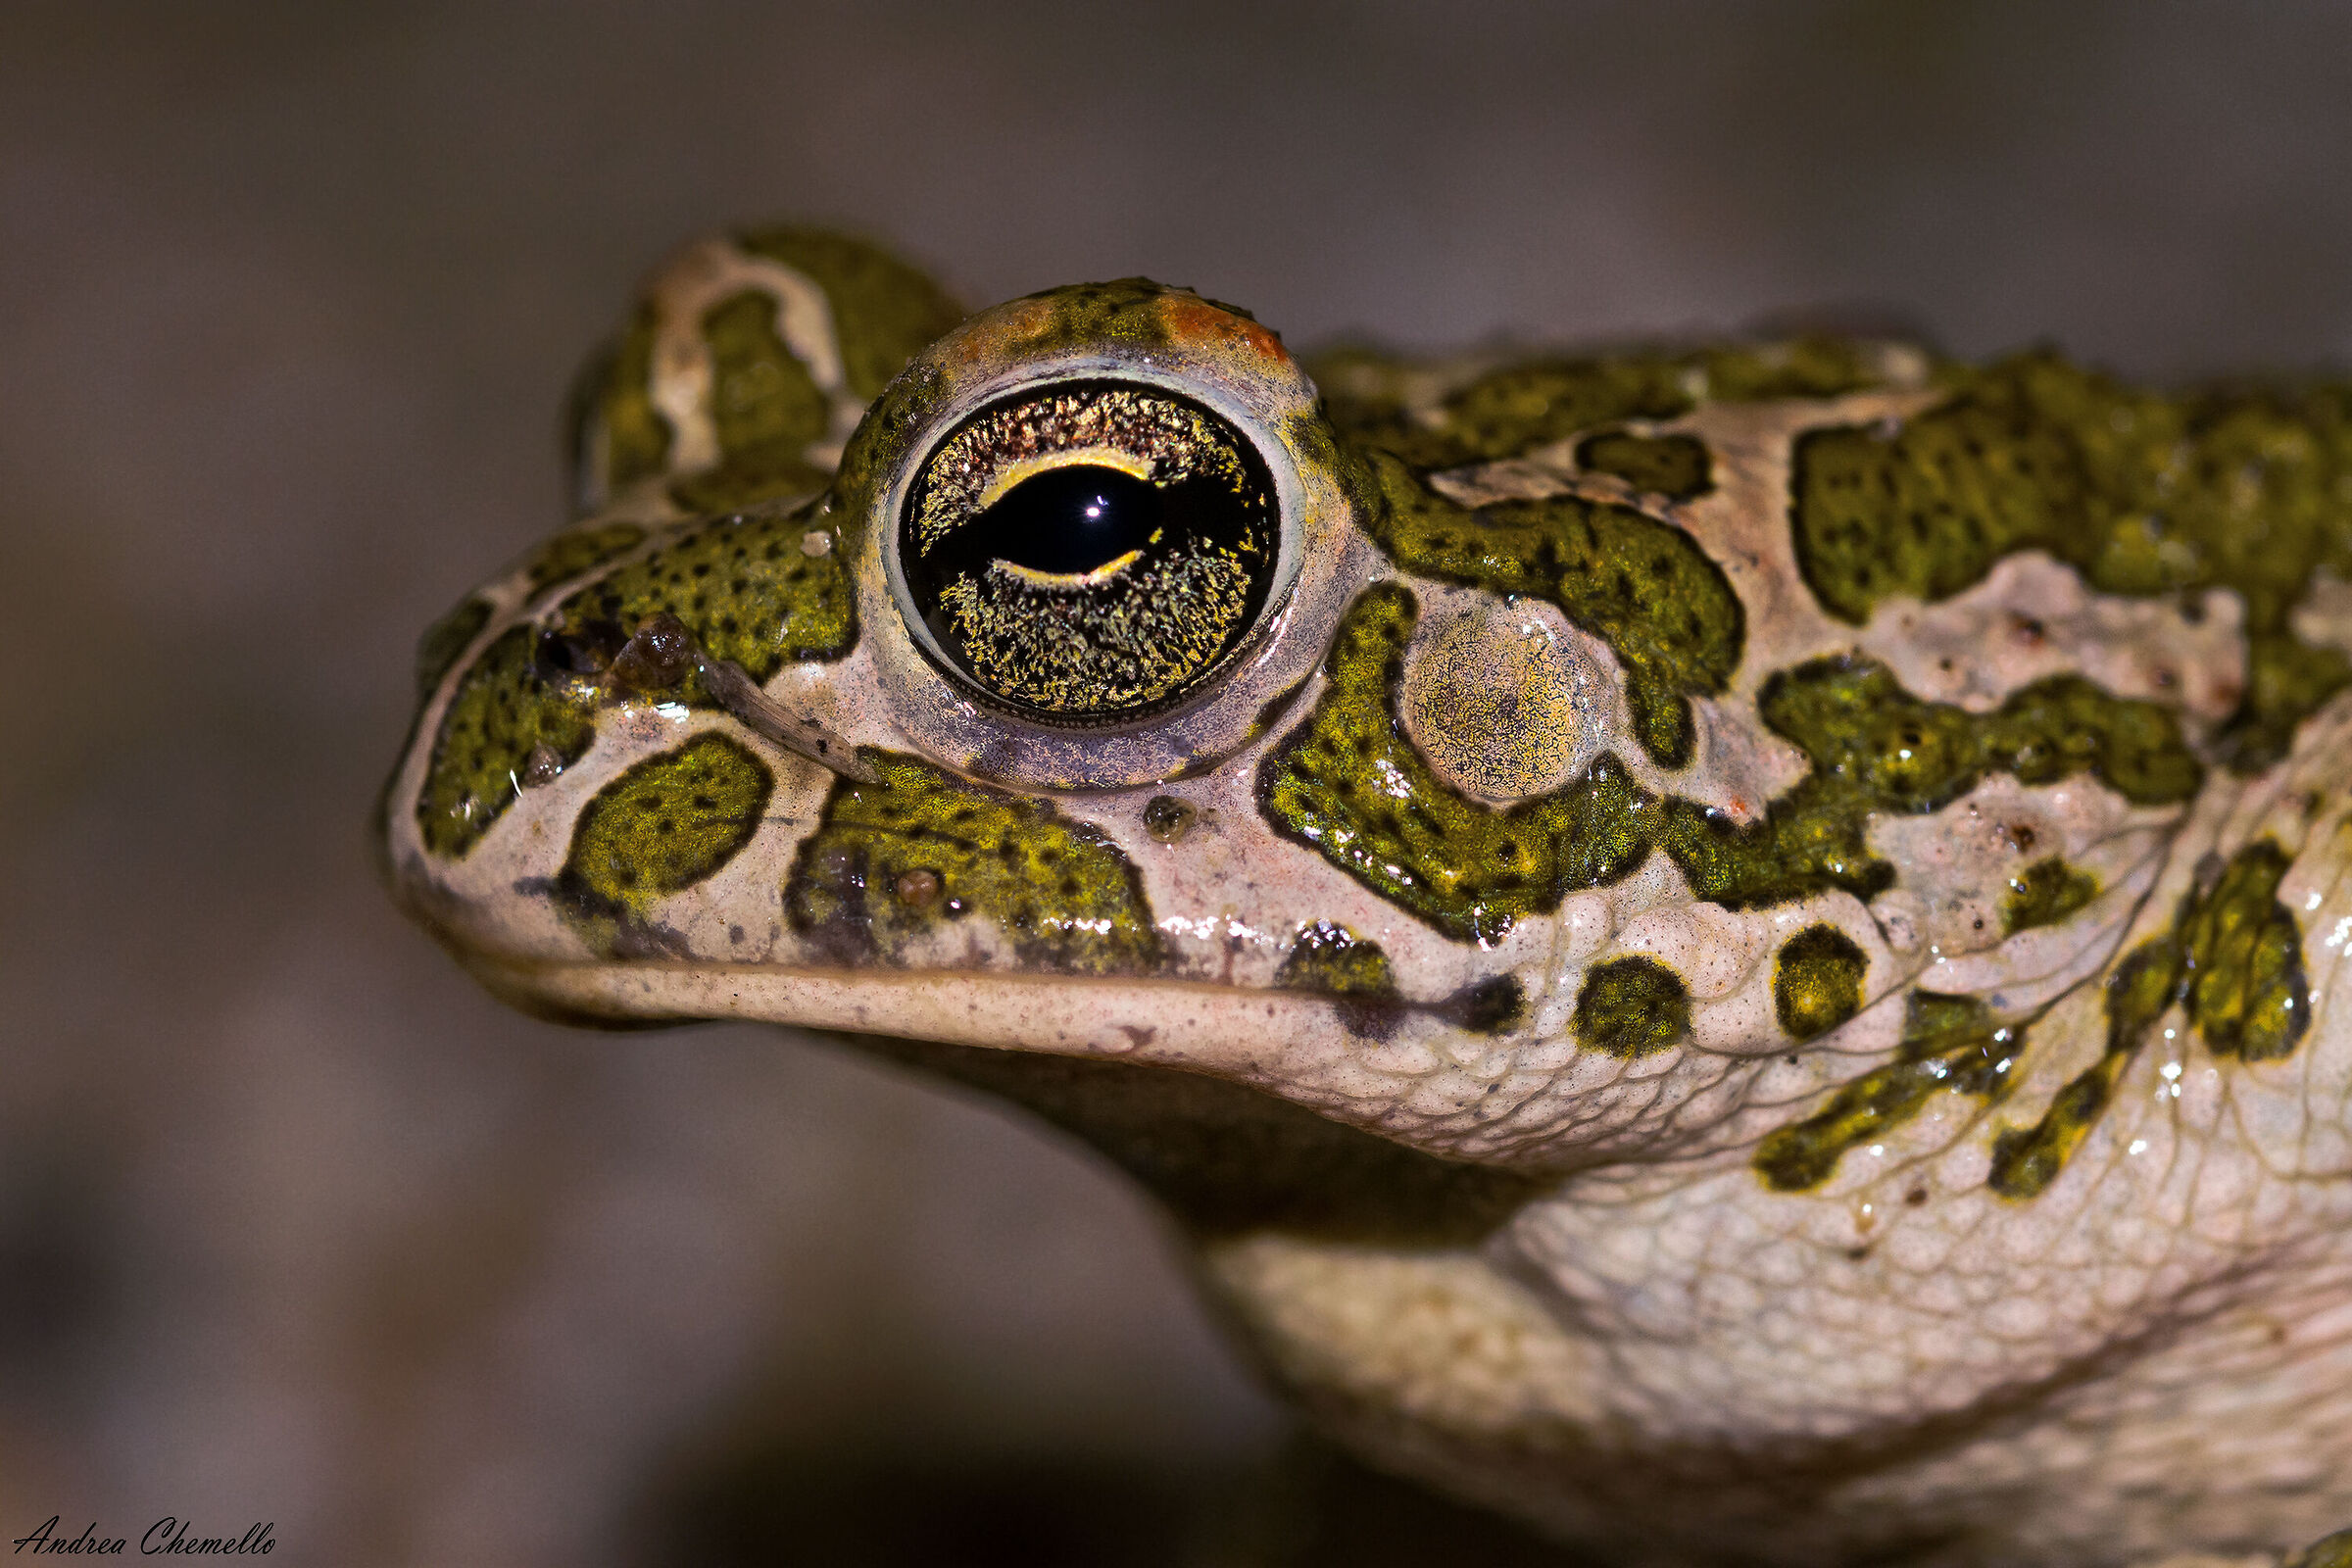 Emerald toad (Bufotes viridis balearicus)...